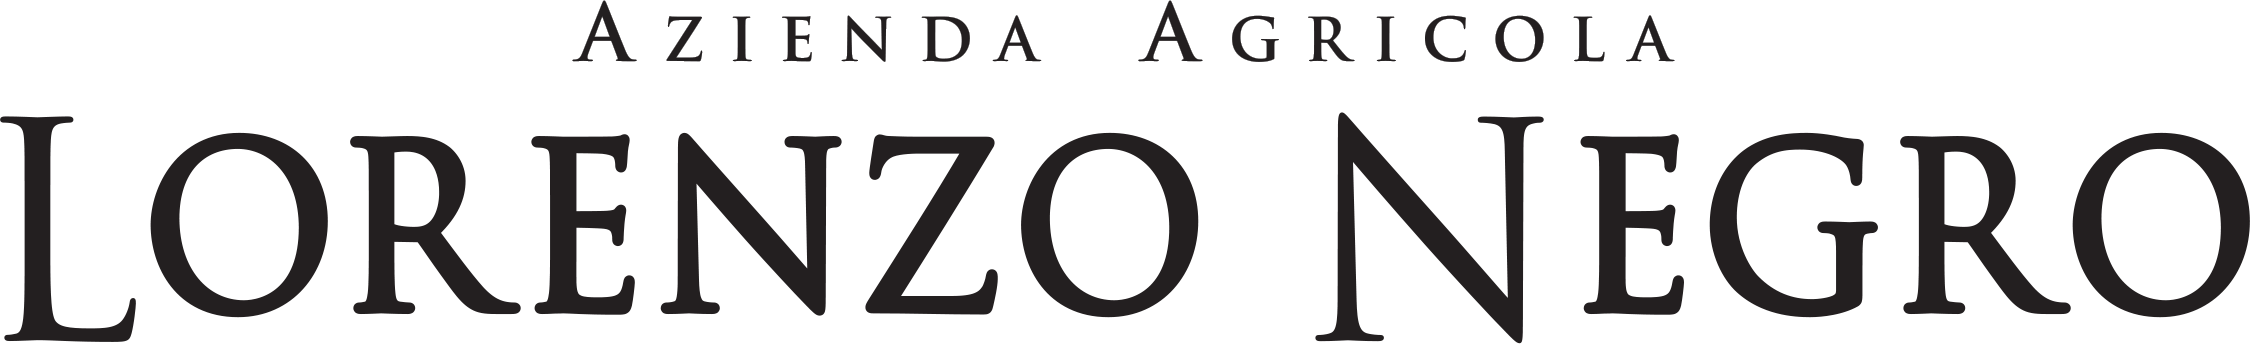 Azienda Agricola Lorenzo Negro